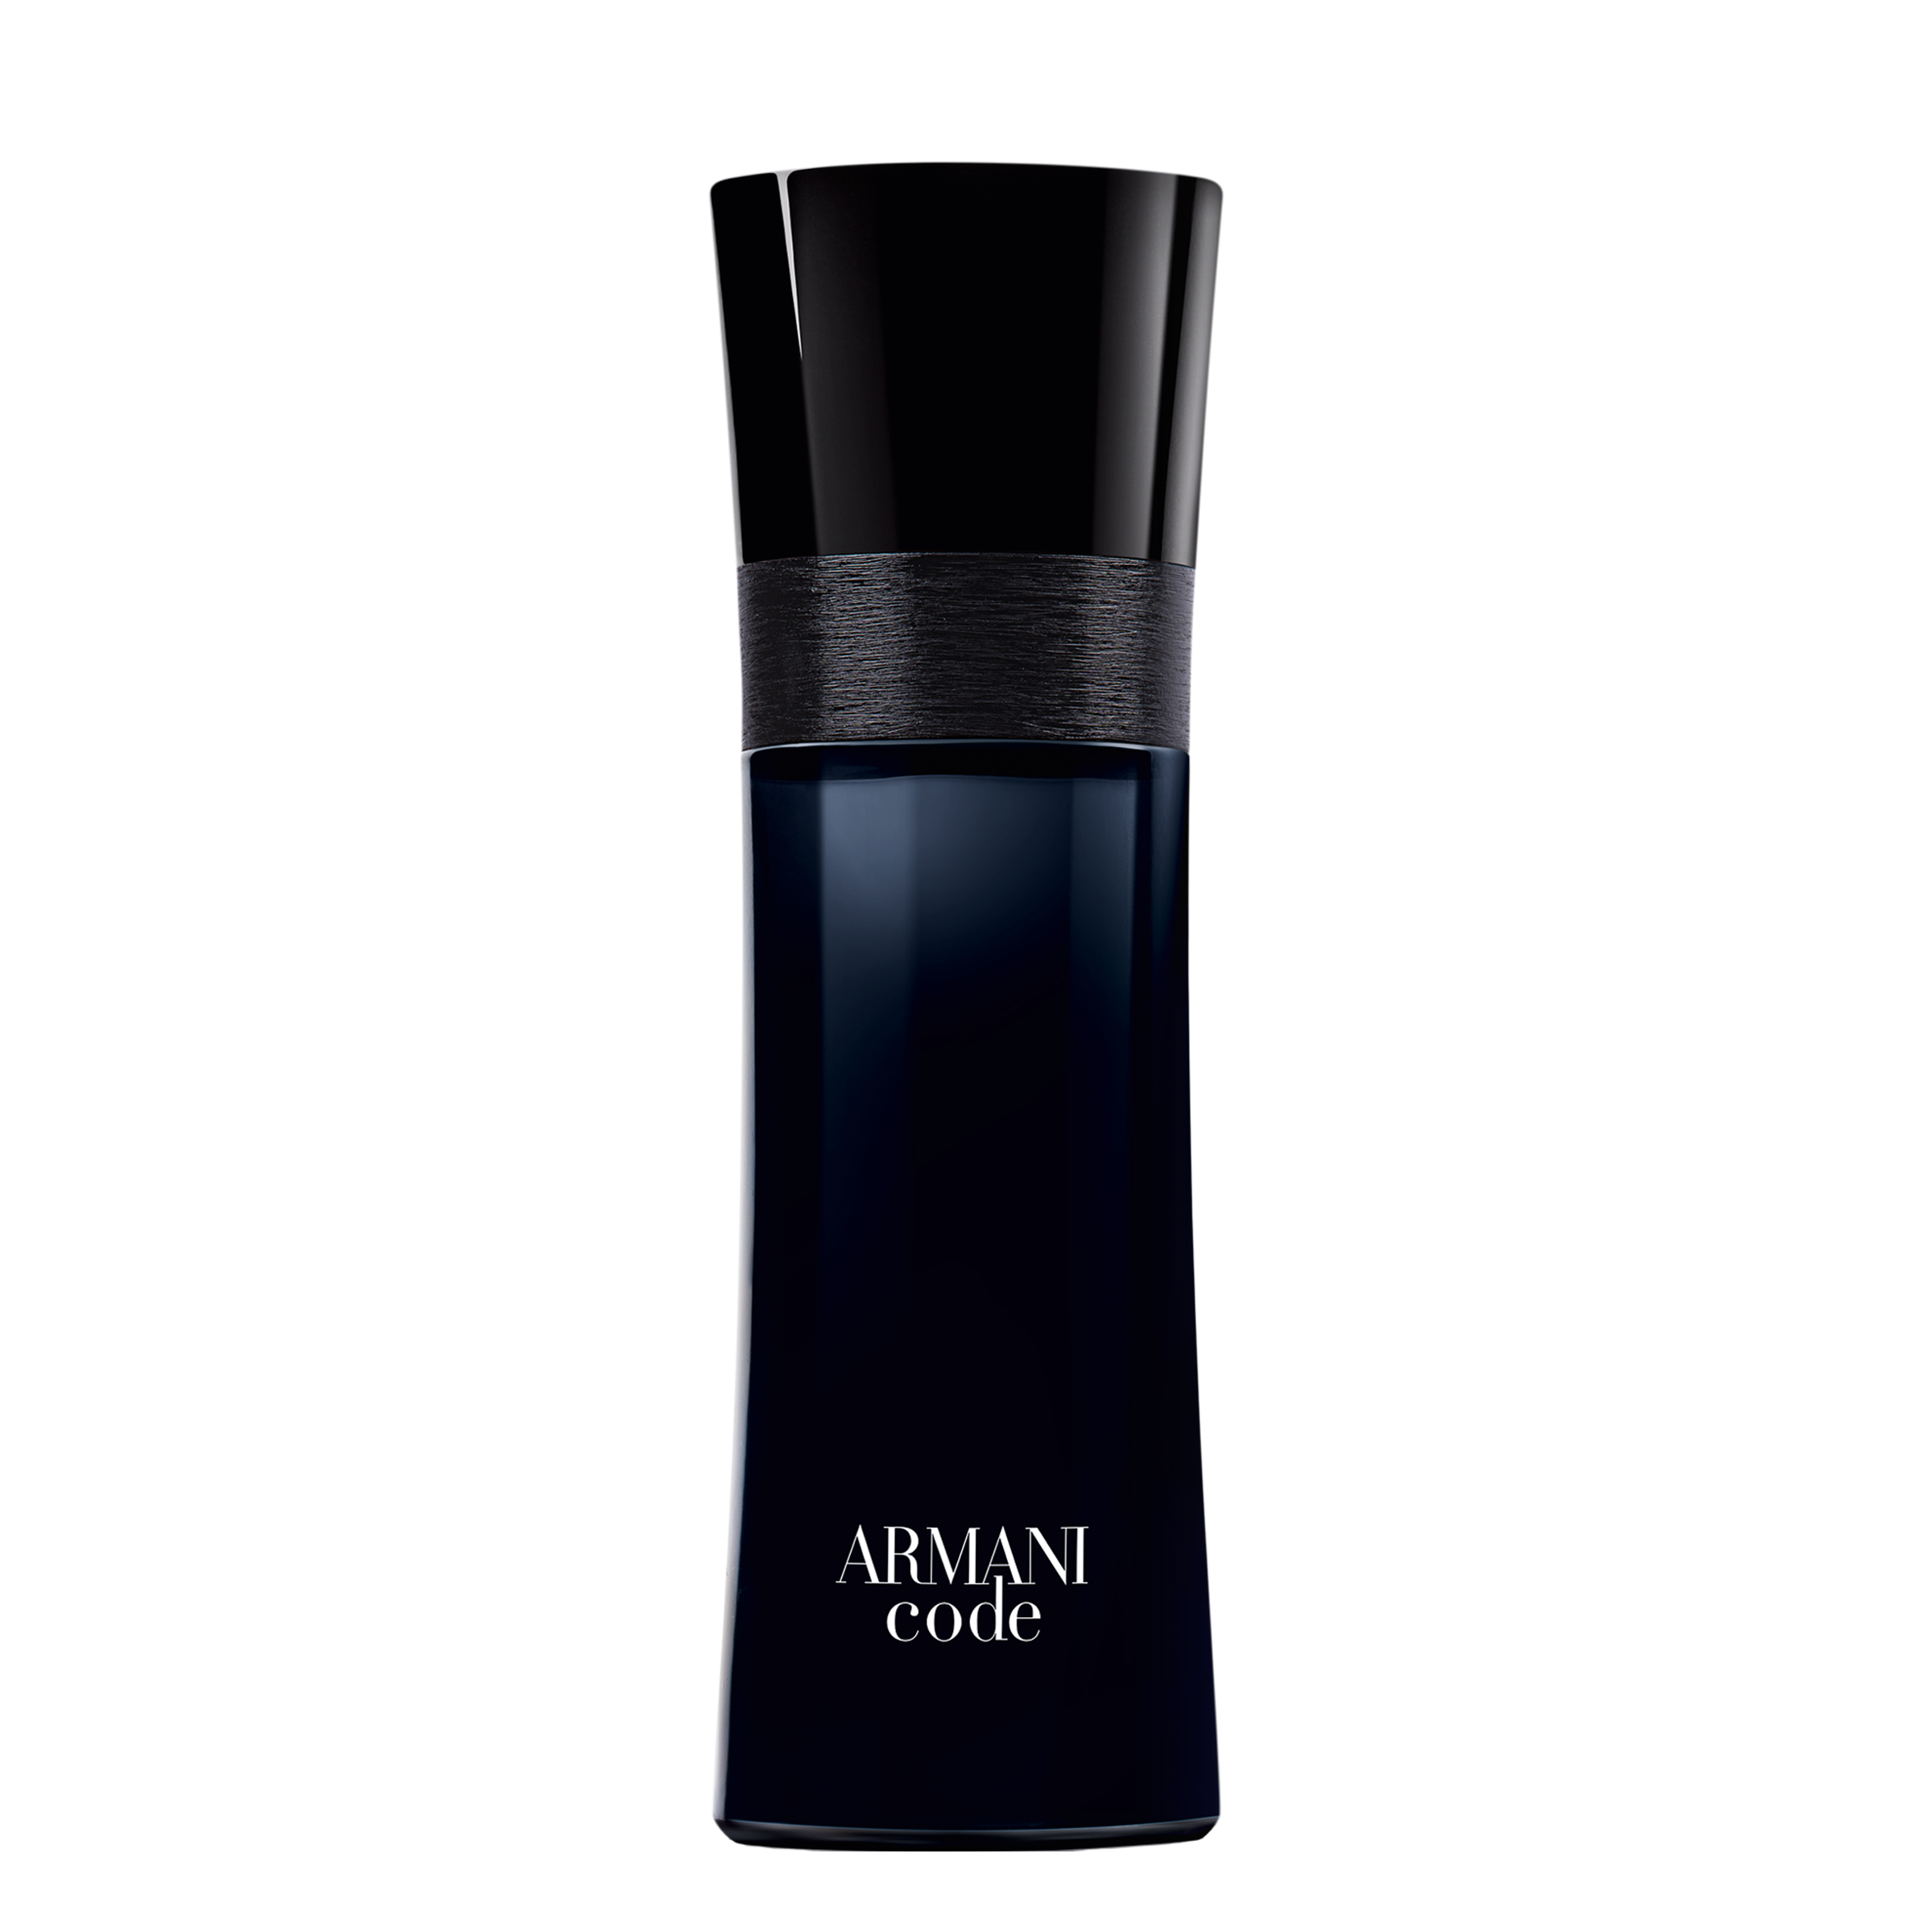 armani code old bottle